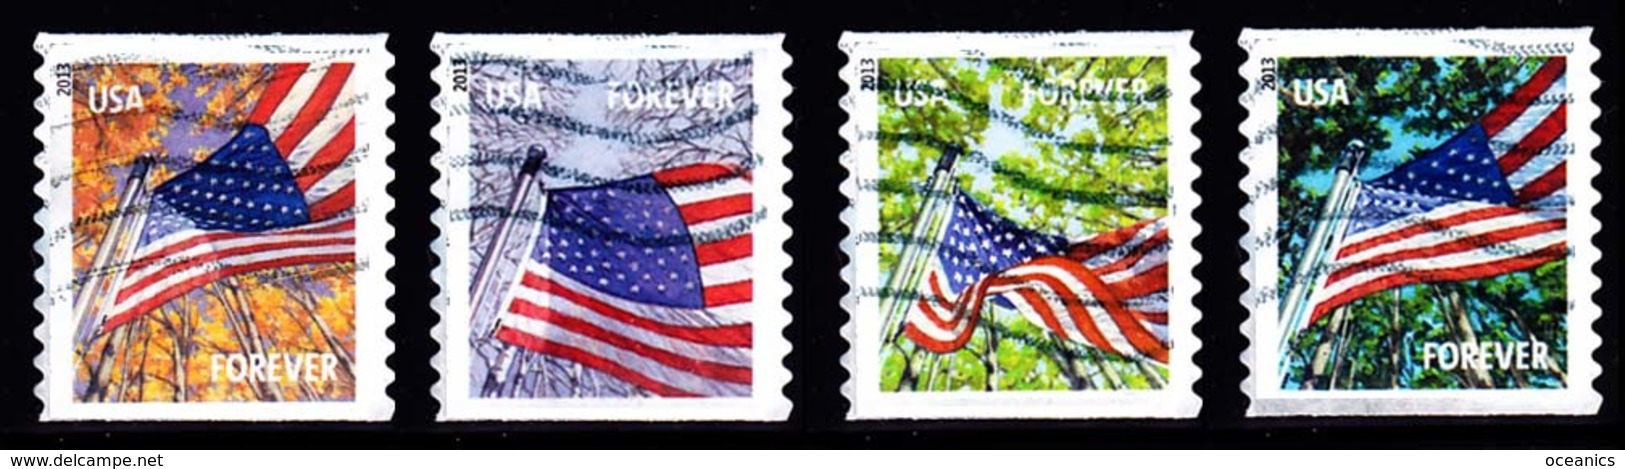 Etats-Unis / United States (Scott No.4774-77 - Flag) (o) - Used Stamps